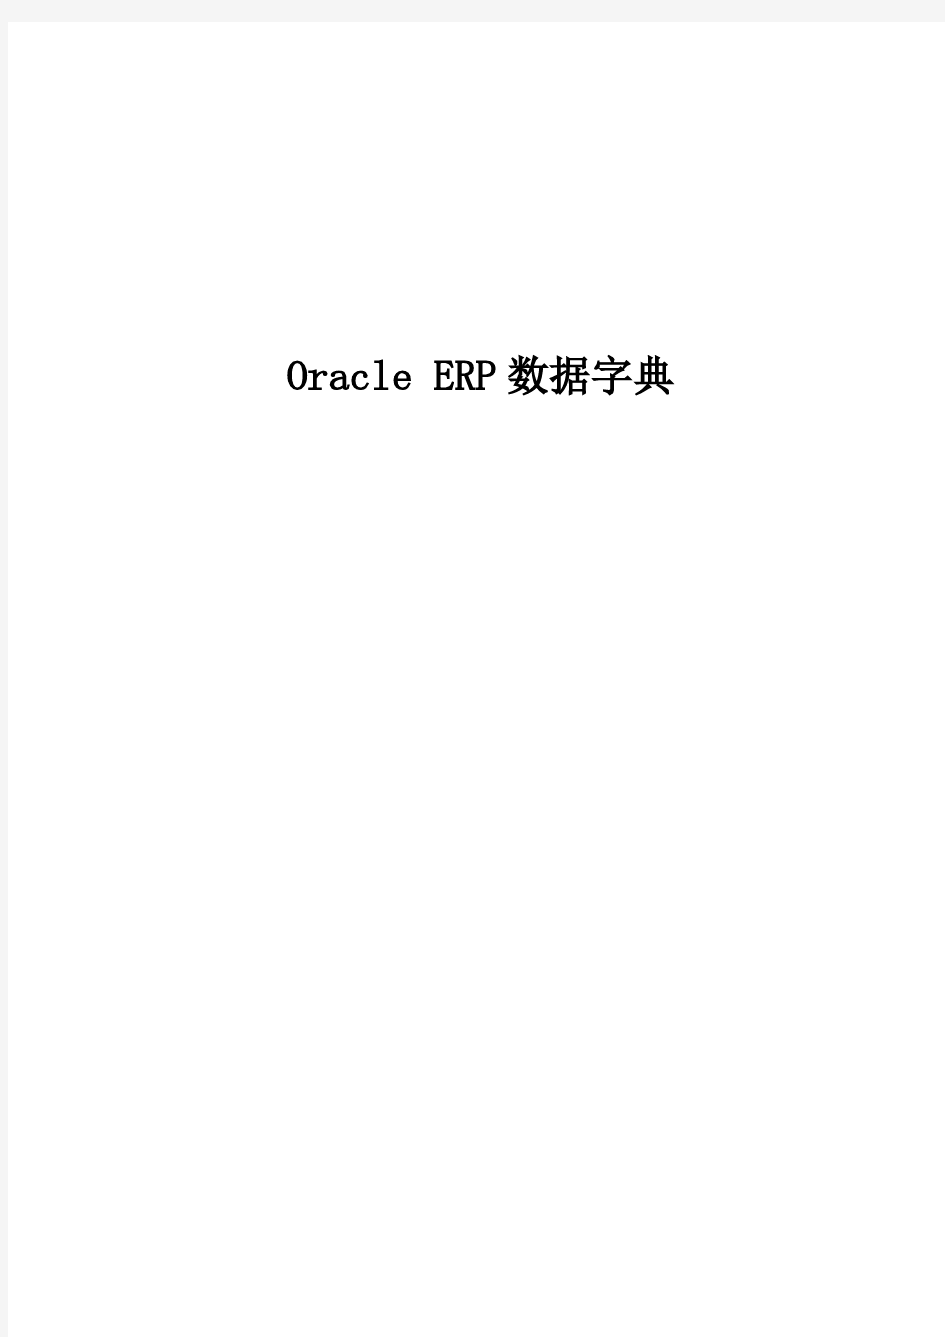 OracleEBS中文数据字典